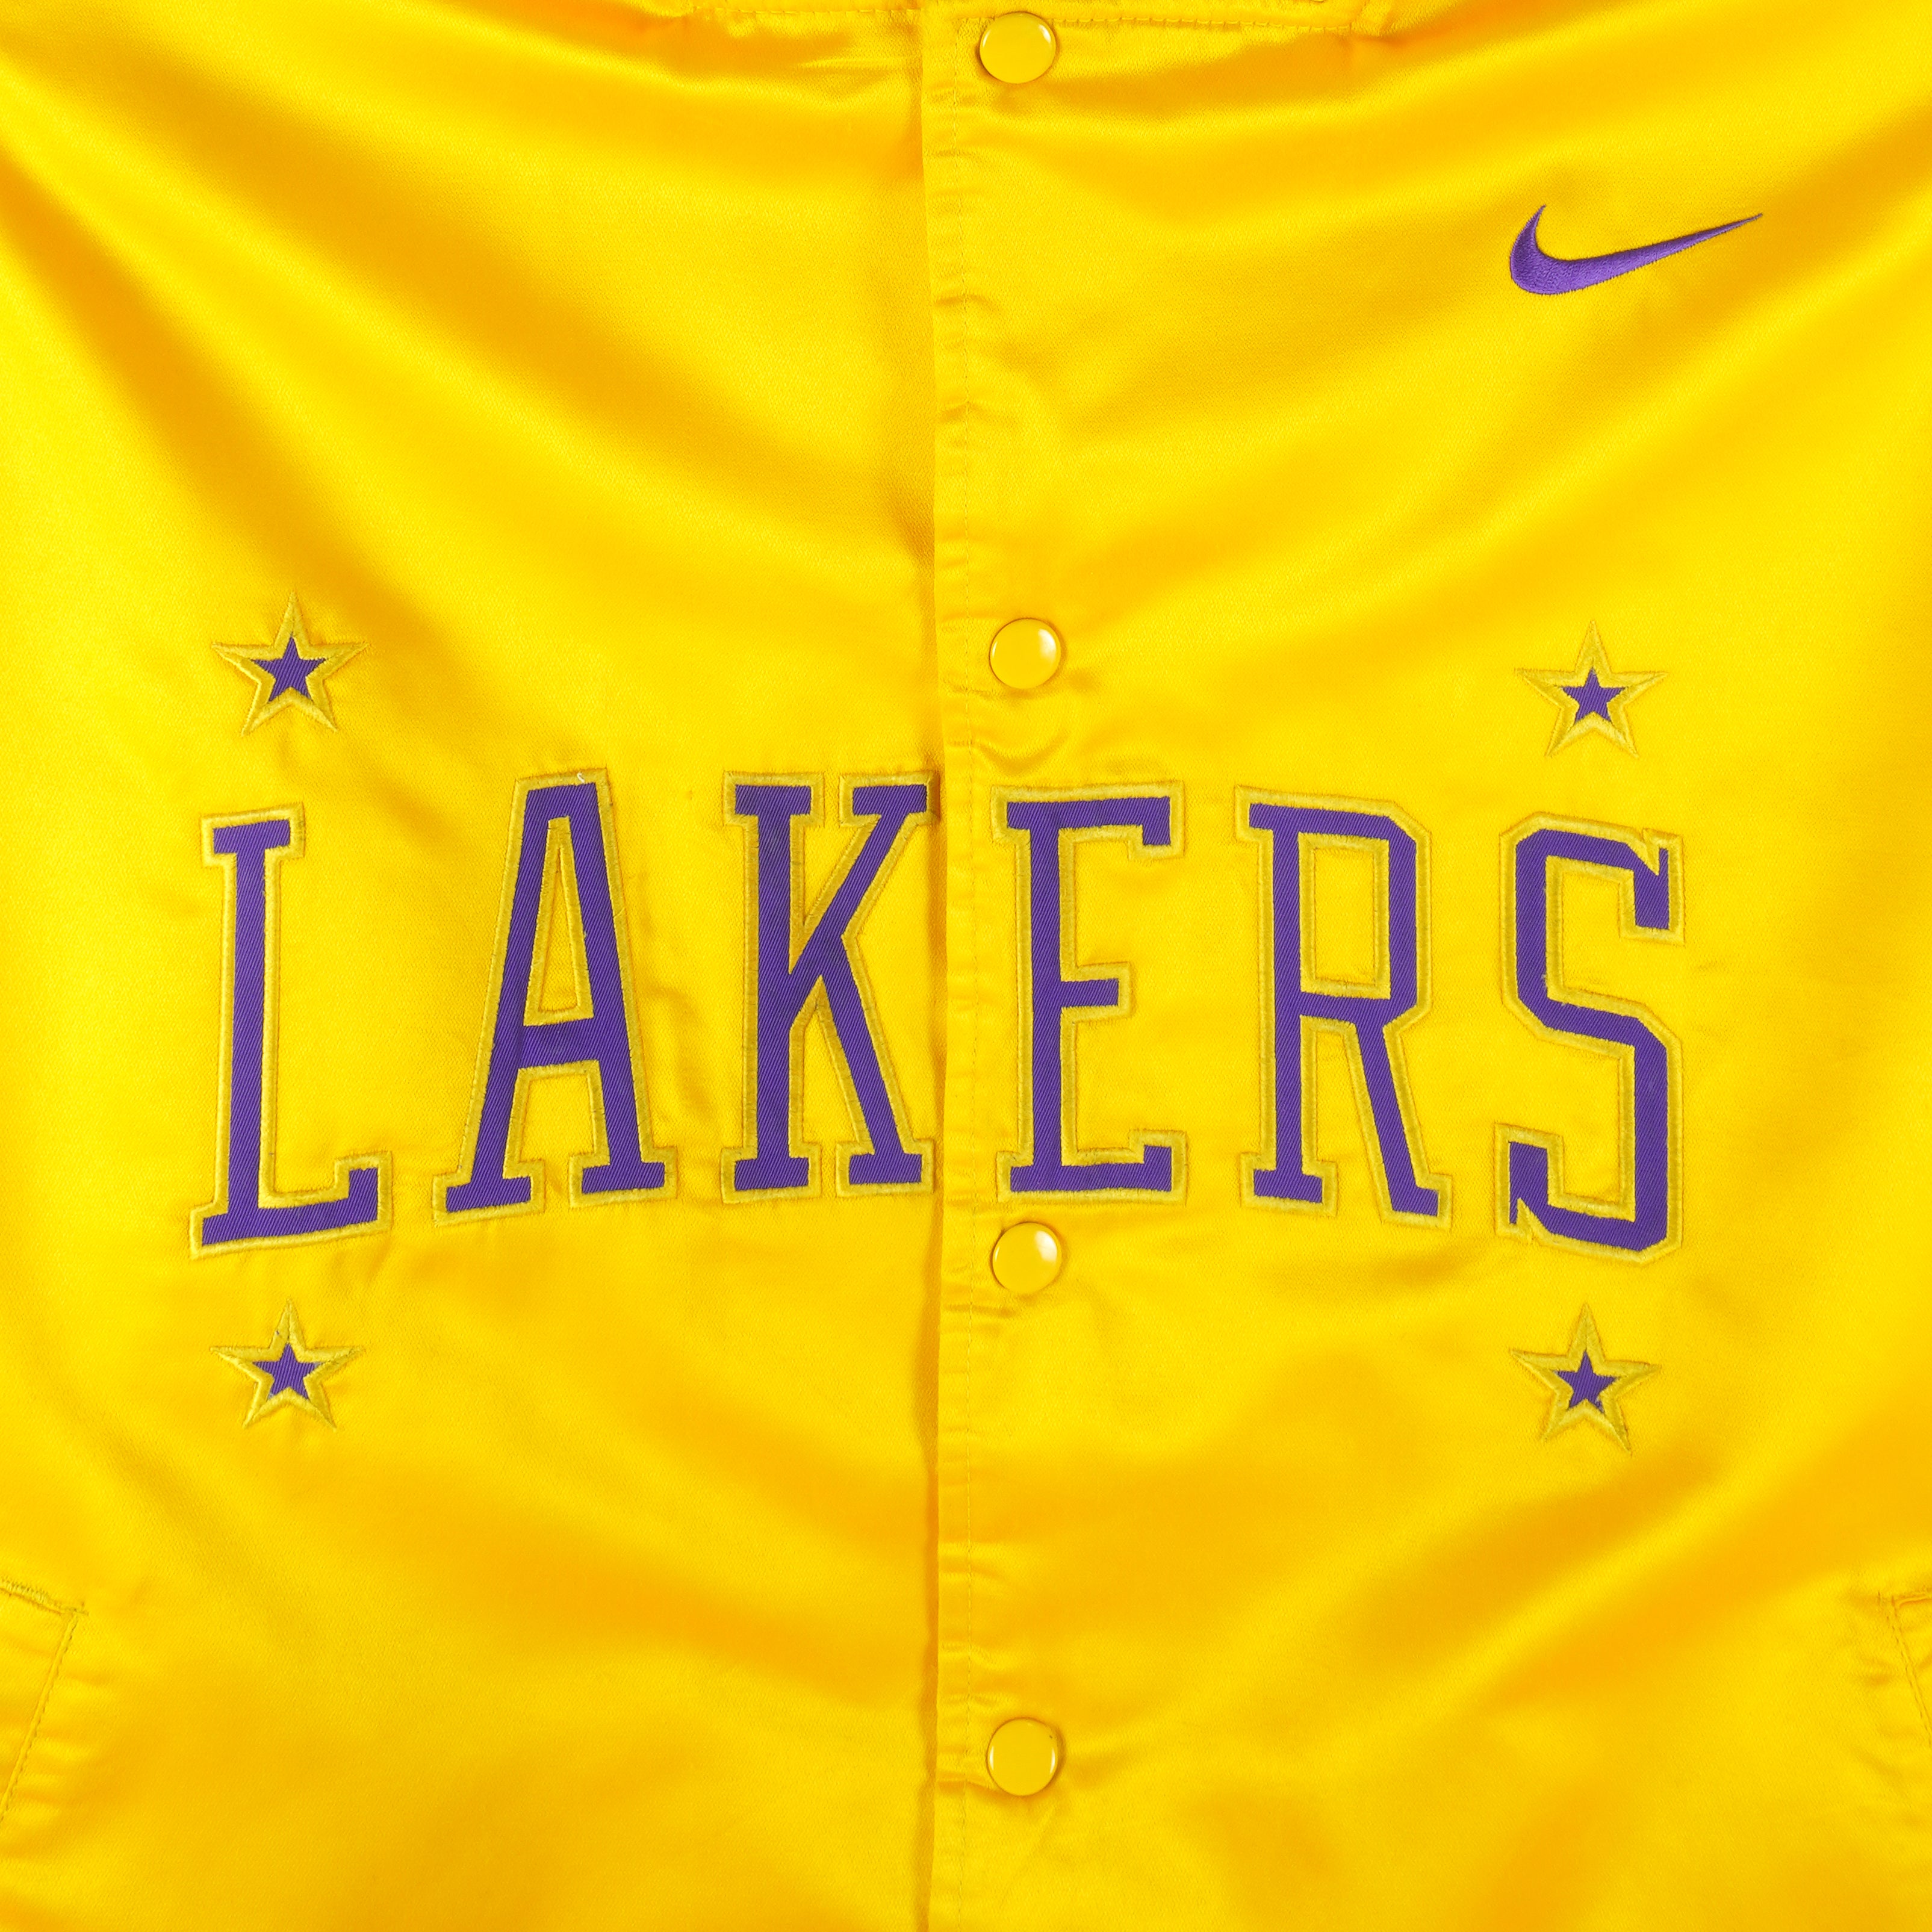 Vintage Los Angeles Lakers NBA satin bomber jacket. Tagged as a